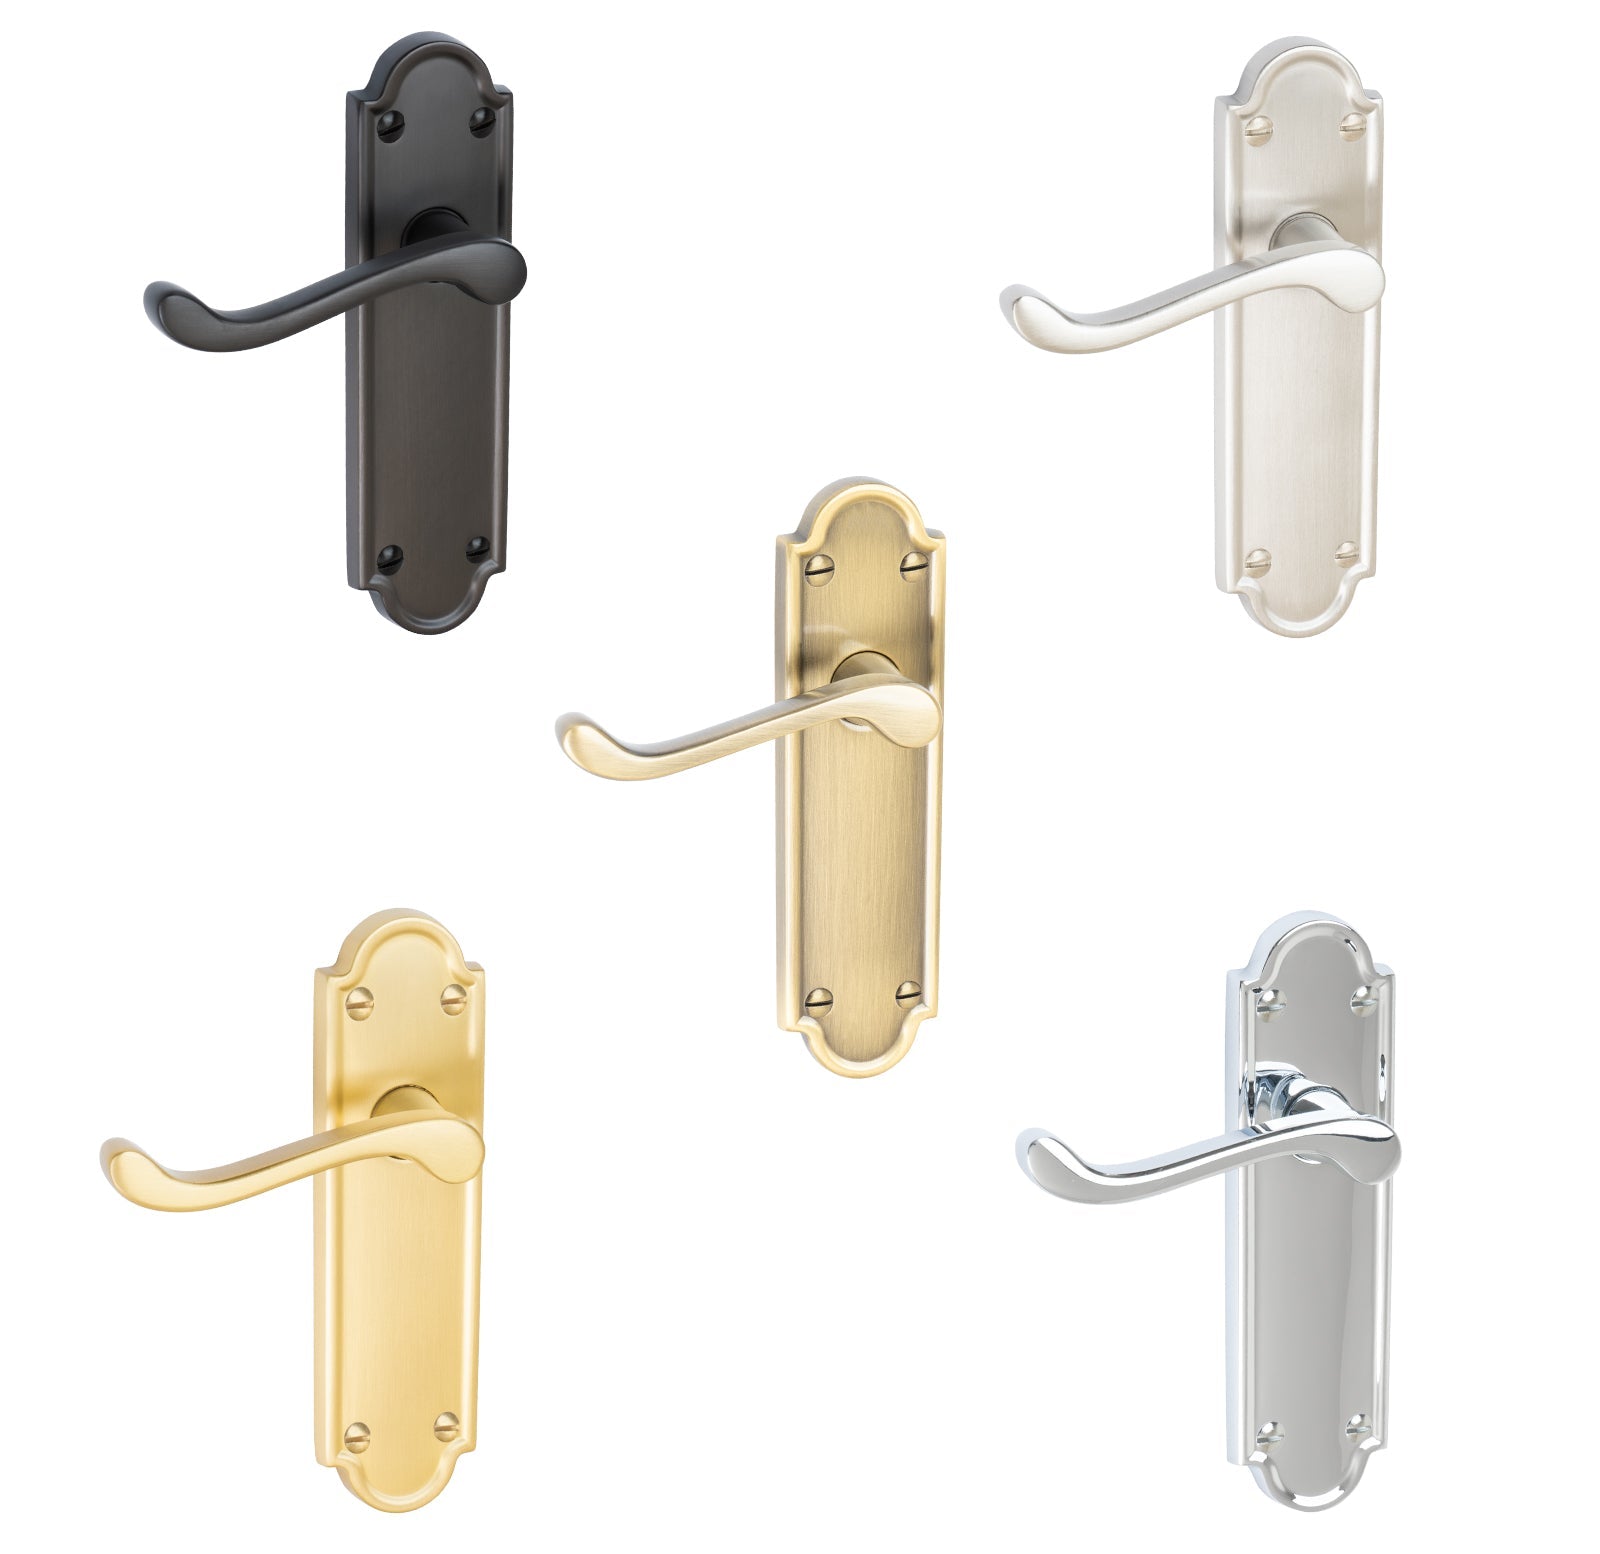 Meridian Door Handles On Plate Latch Handle in Matt Bronze, Satin Nickel, Polished Chrome, Satin Brass and Aged Brass.